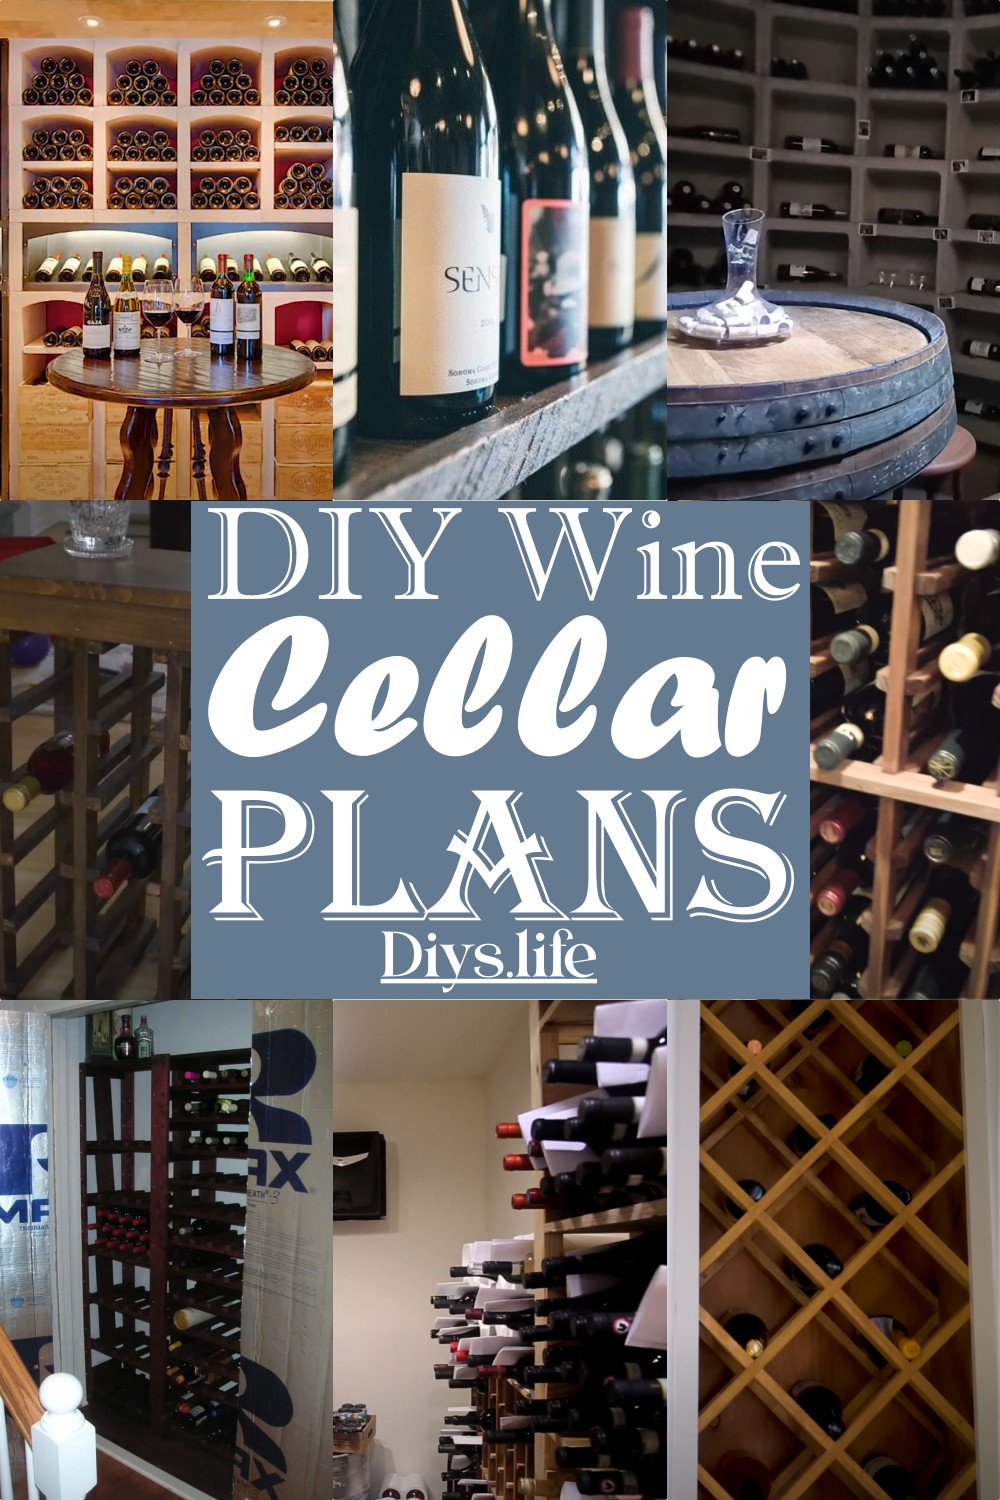 DIY Wine Cellar Plans for storage